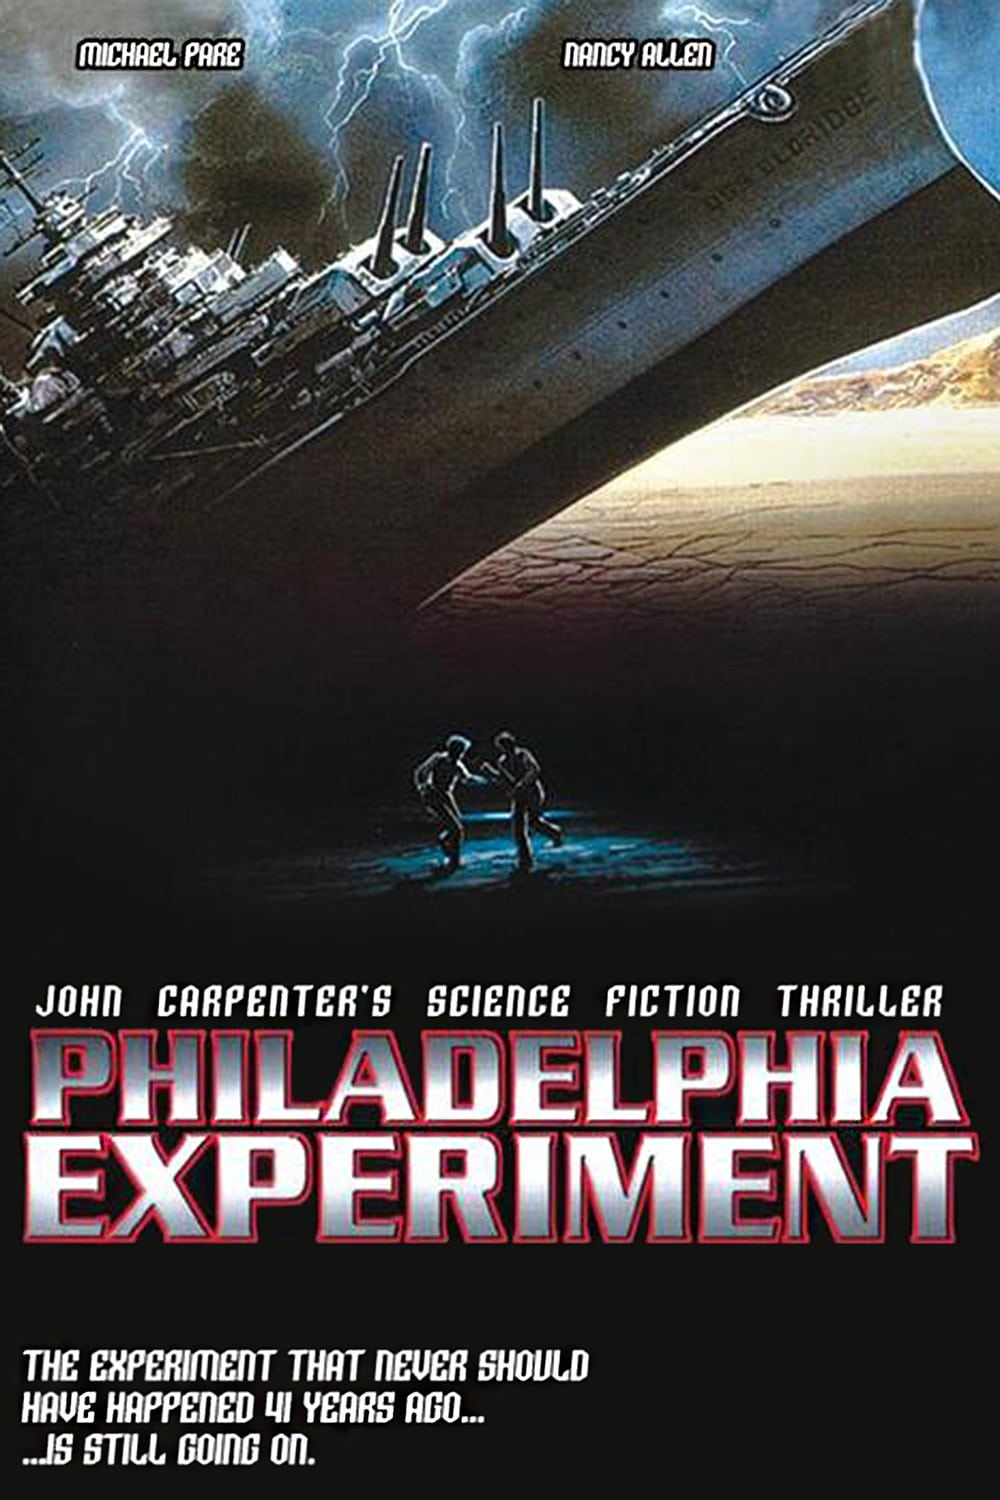 Stiahni si Filmy DVD Filadelfsky experiment / The Philadelphia Experiment (1984)(CZ/EN) = CSFD 58%